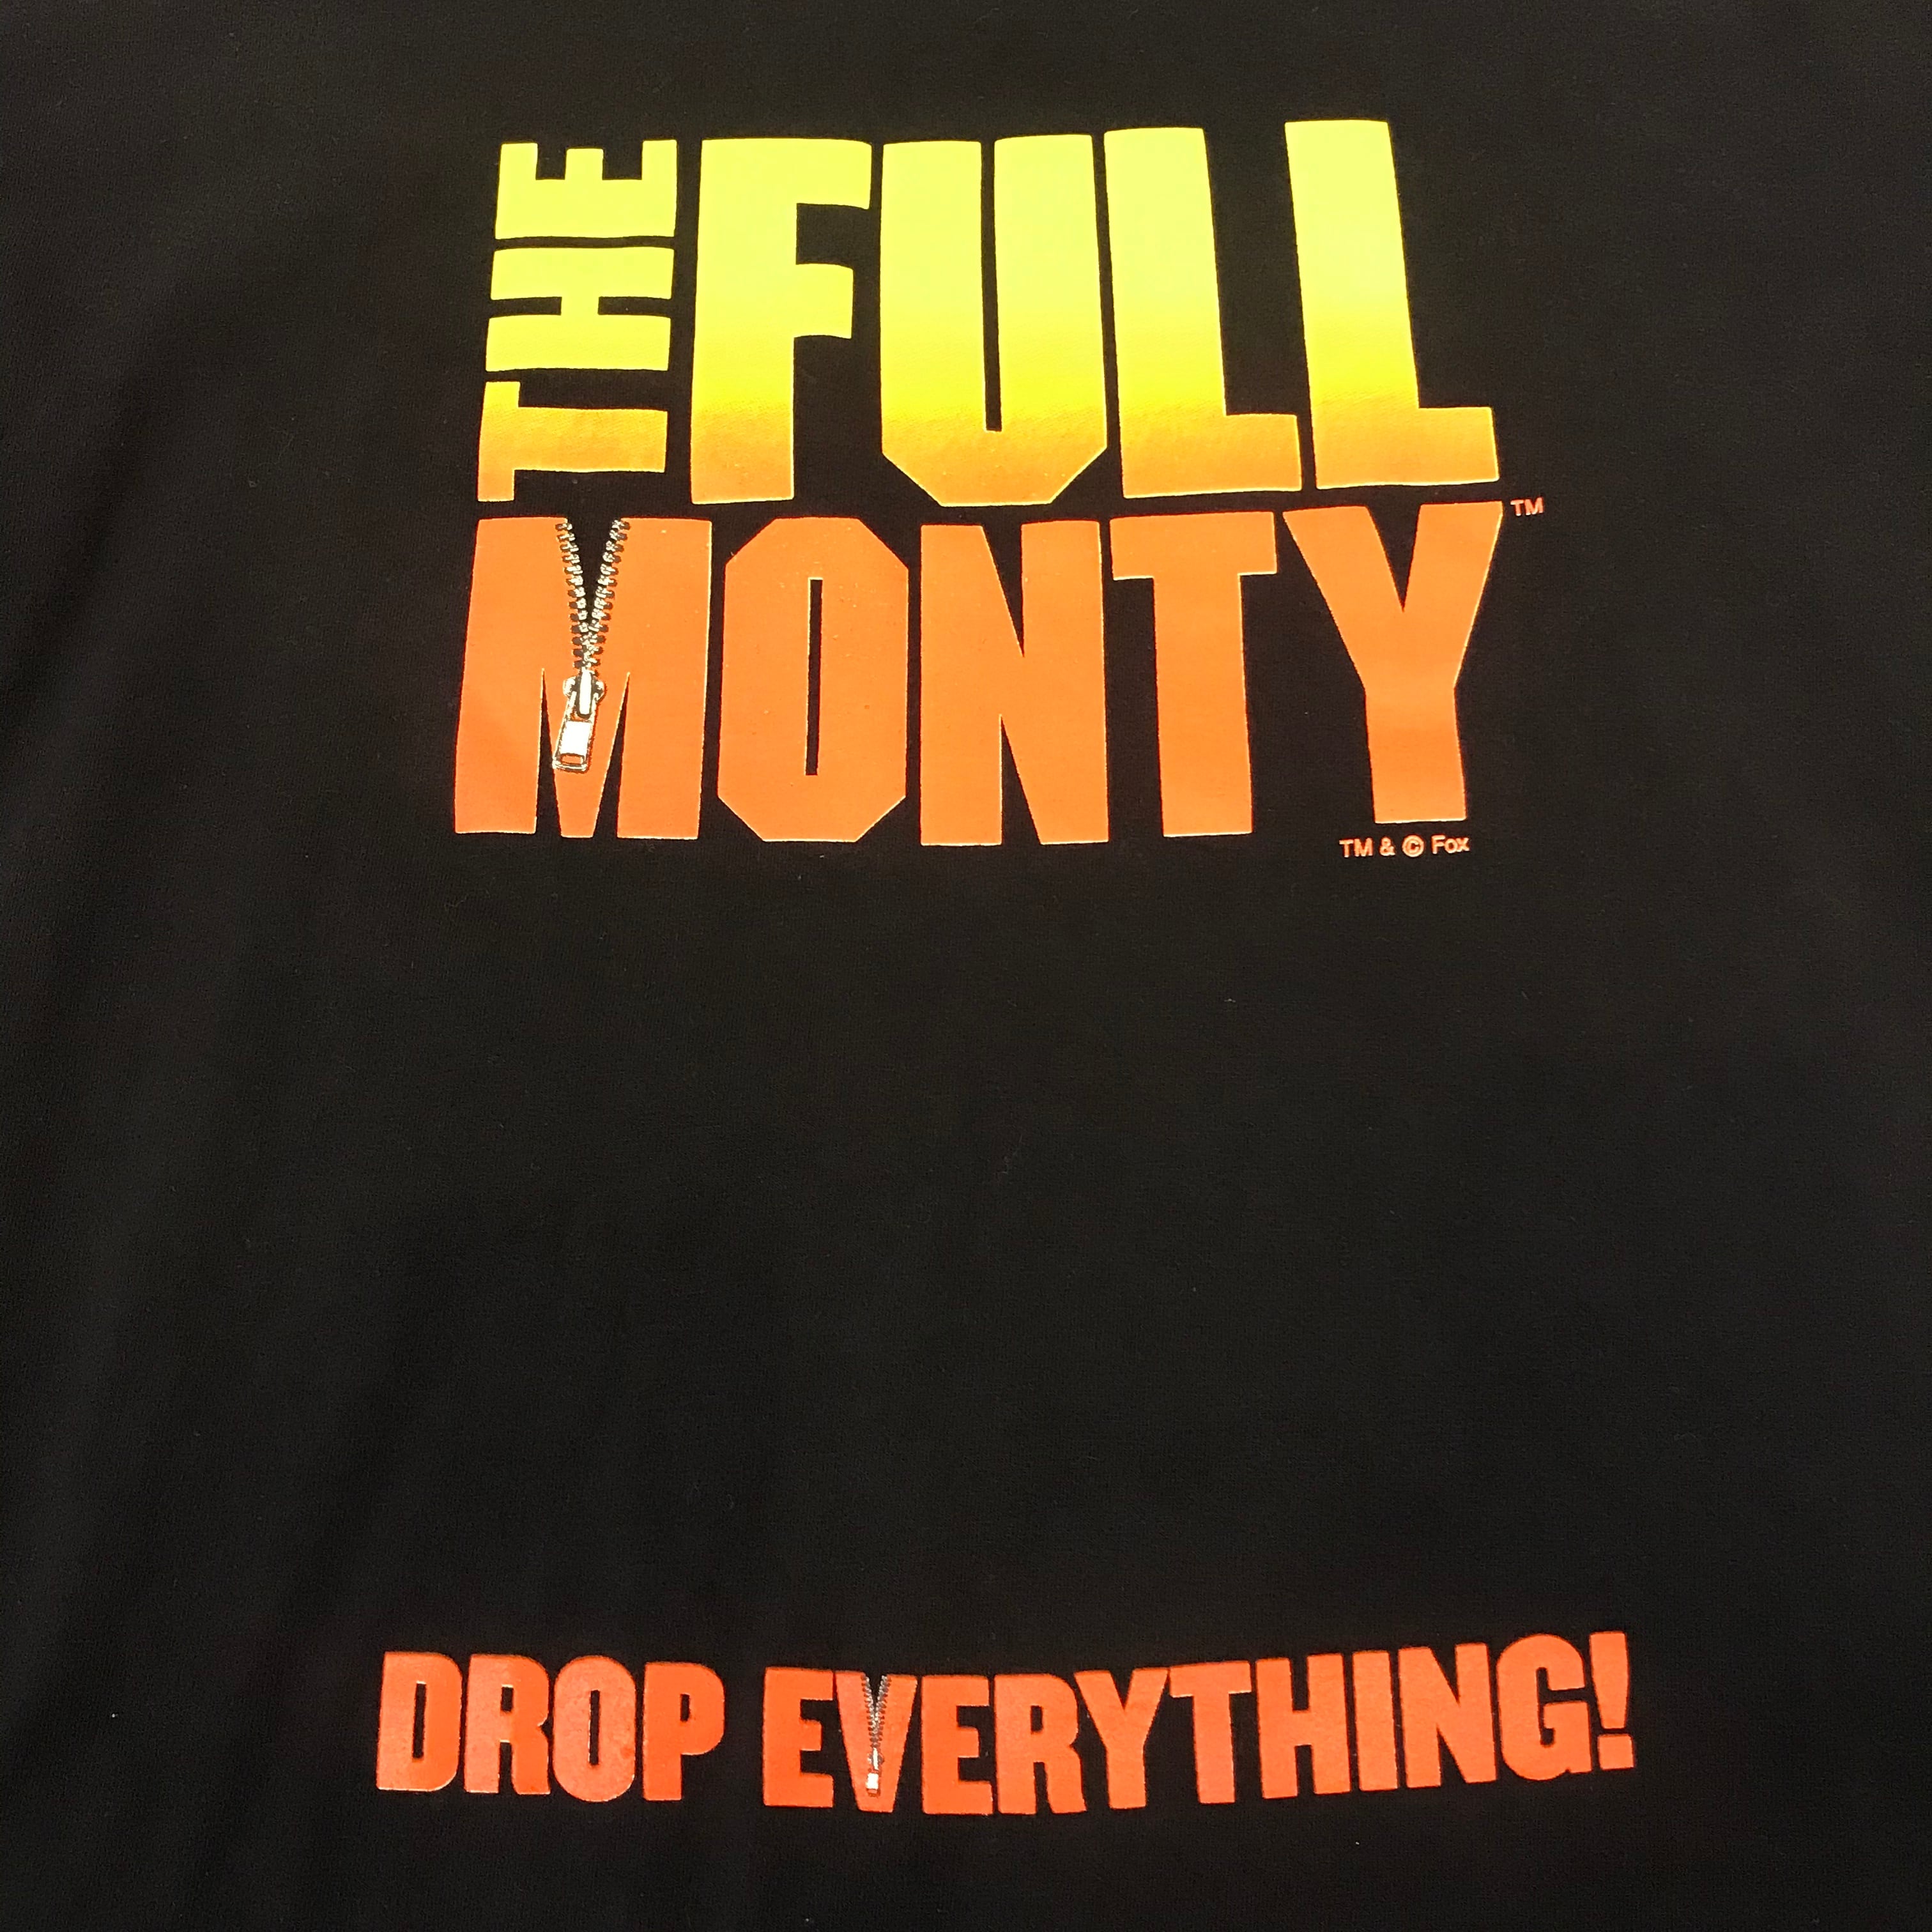 90s Movie full monty フルモンティ　映画　Tシャツ